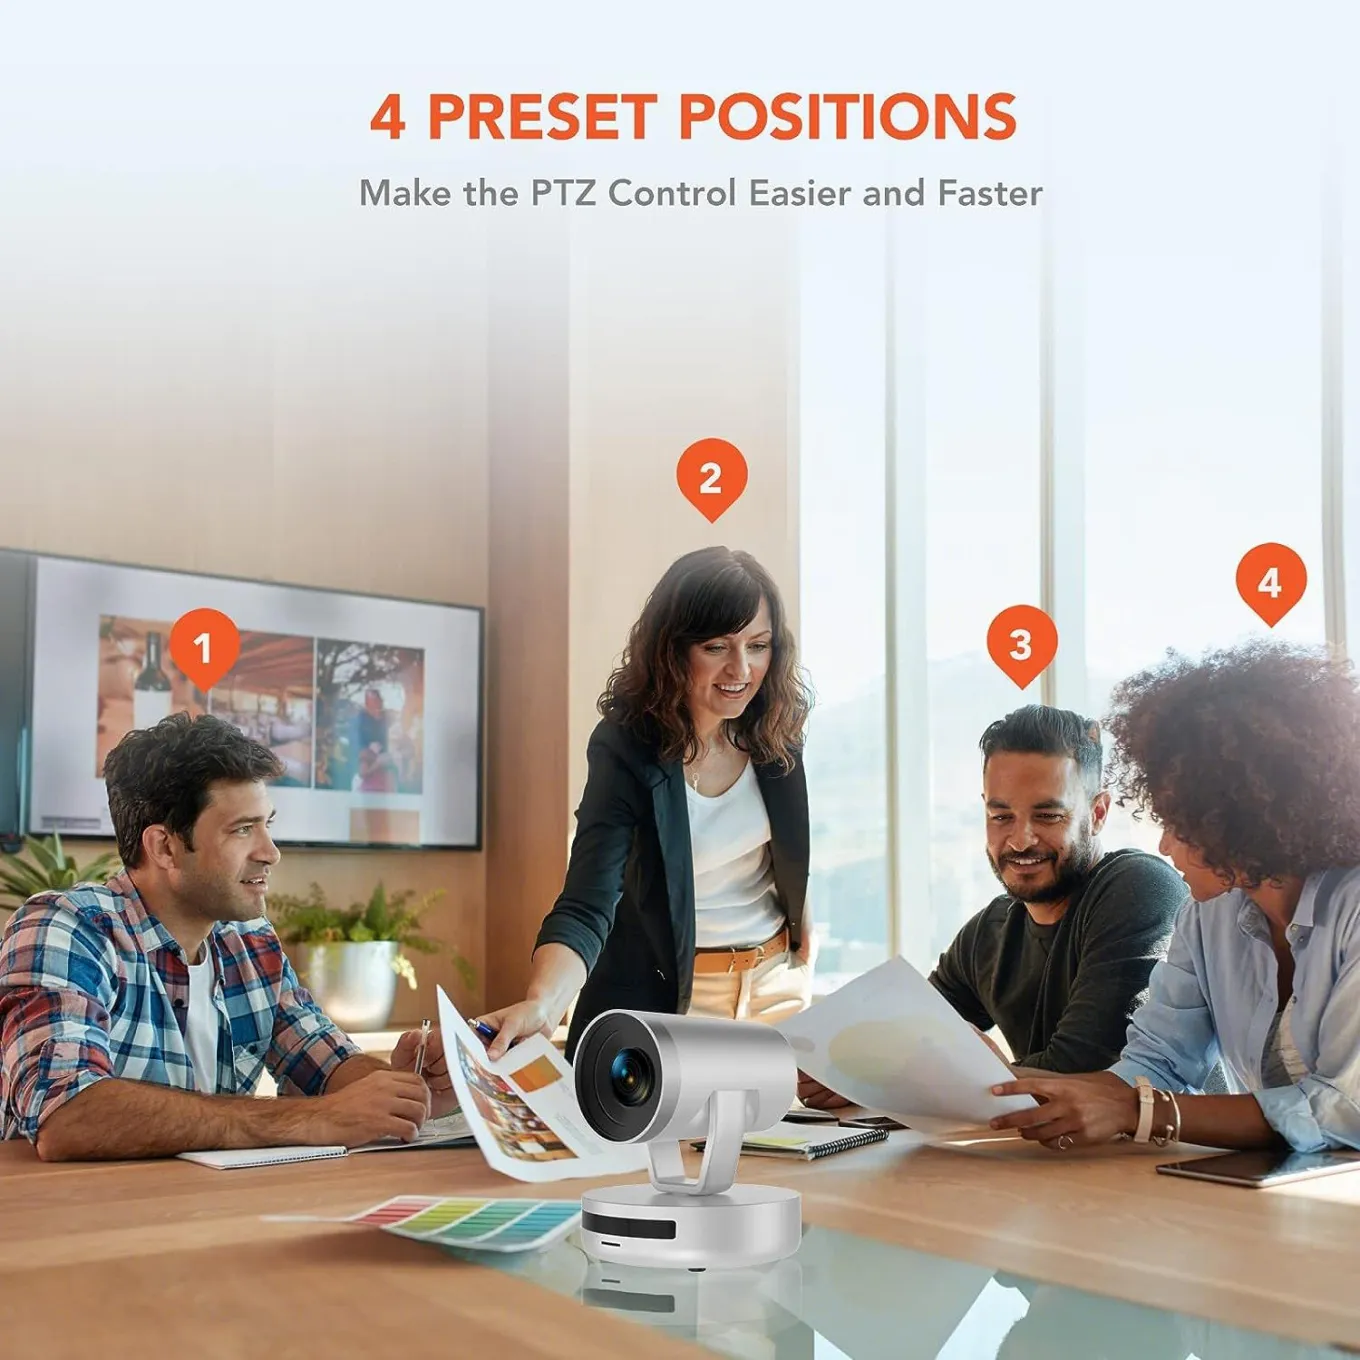 4 preset positions